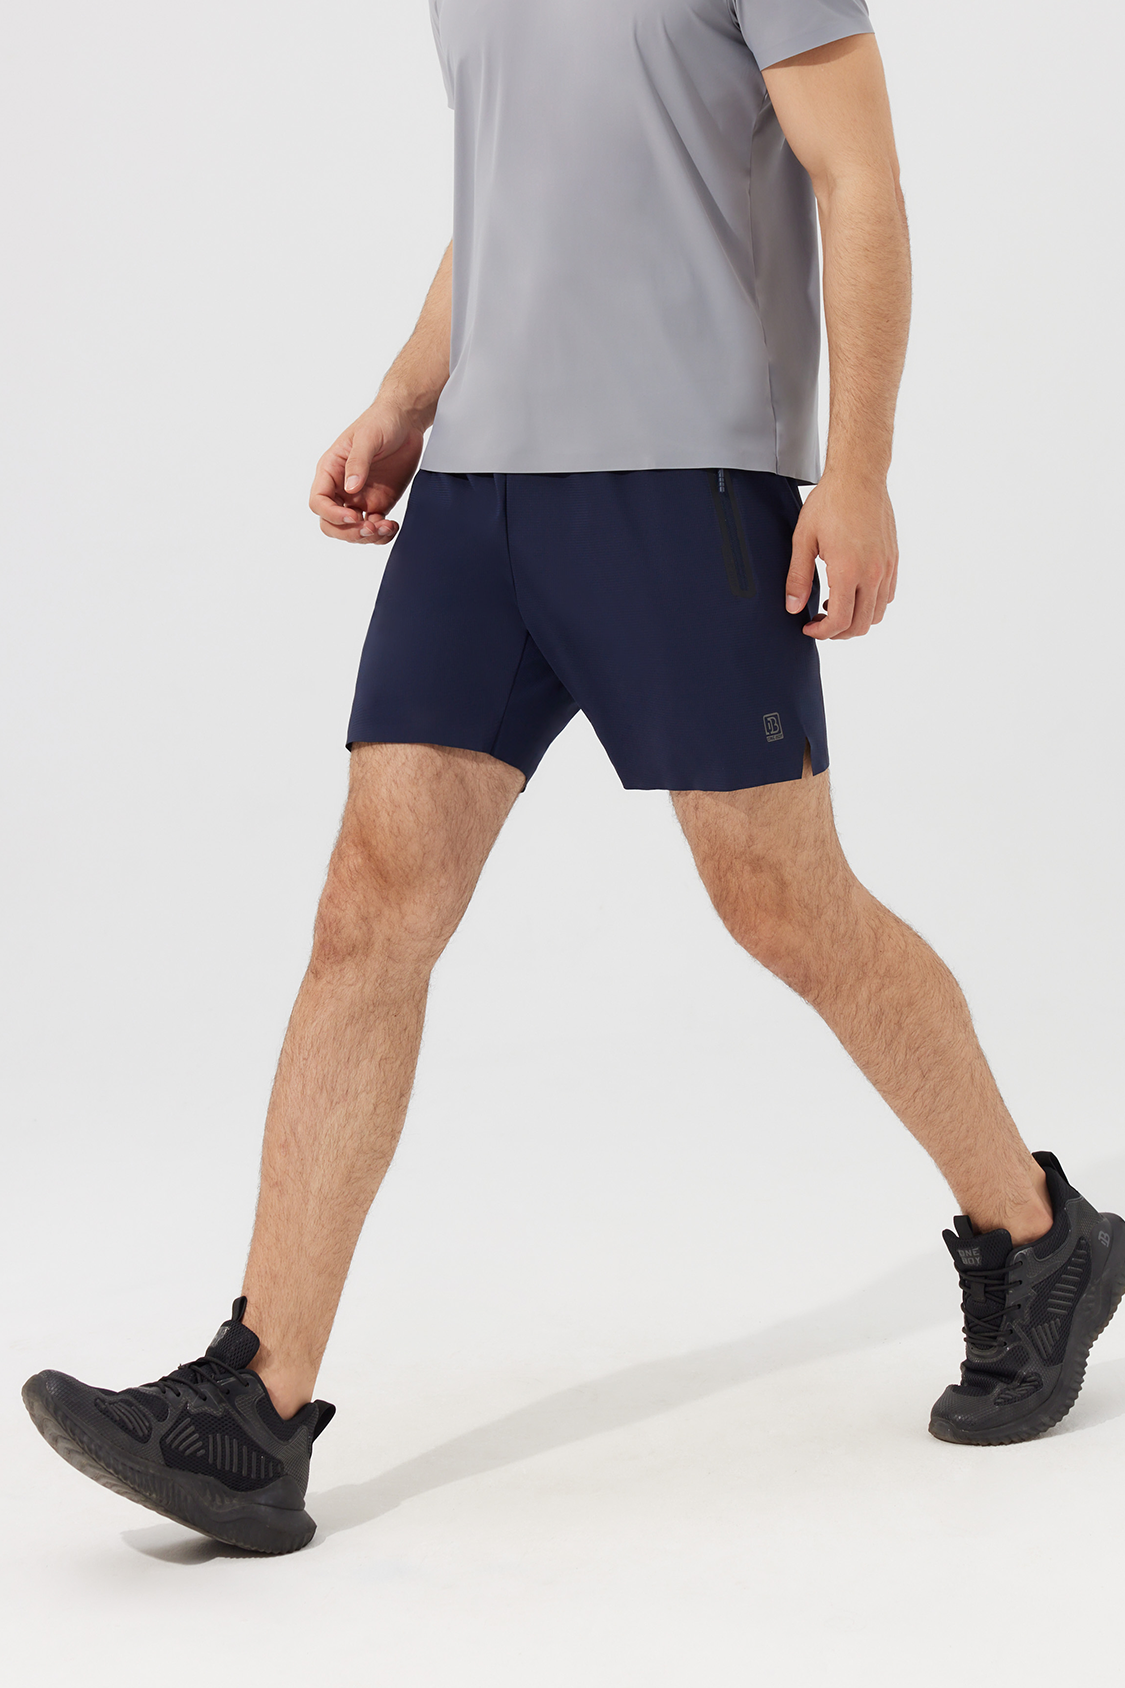 Ice-Tech Quick Dry Seamless Men's Shorts